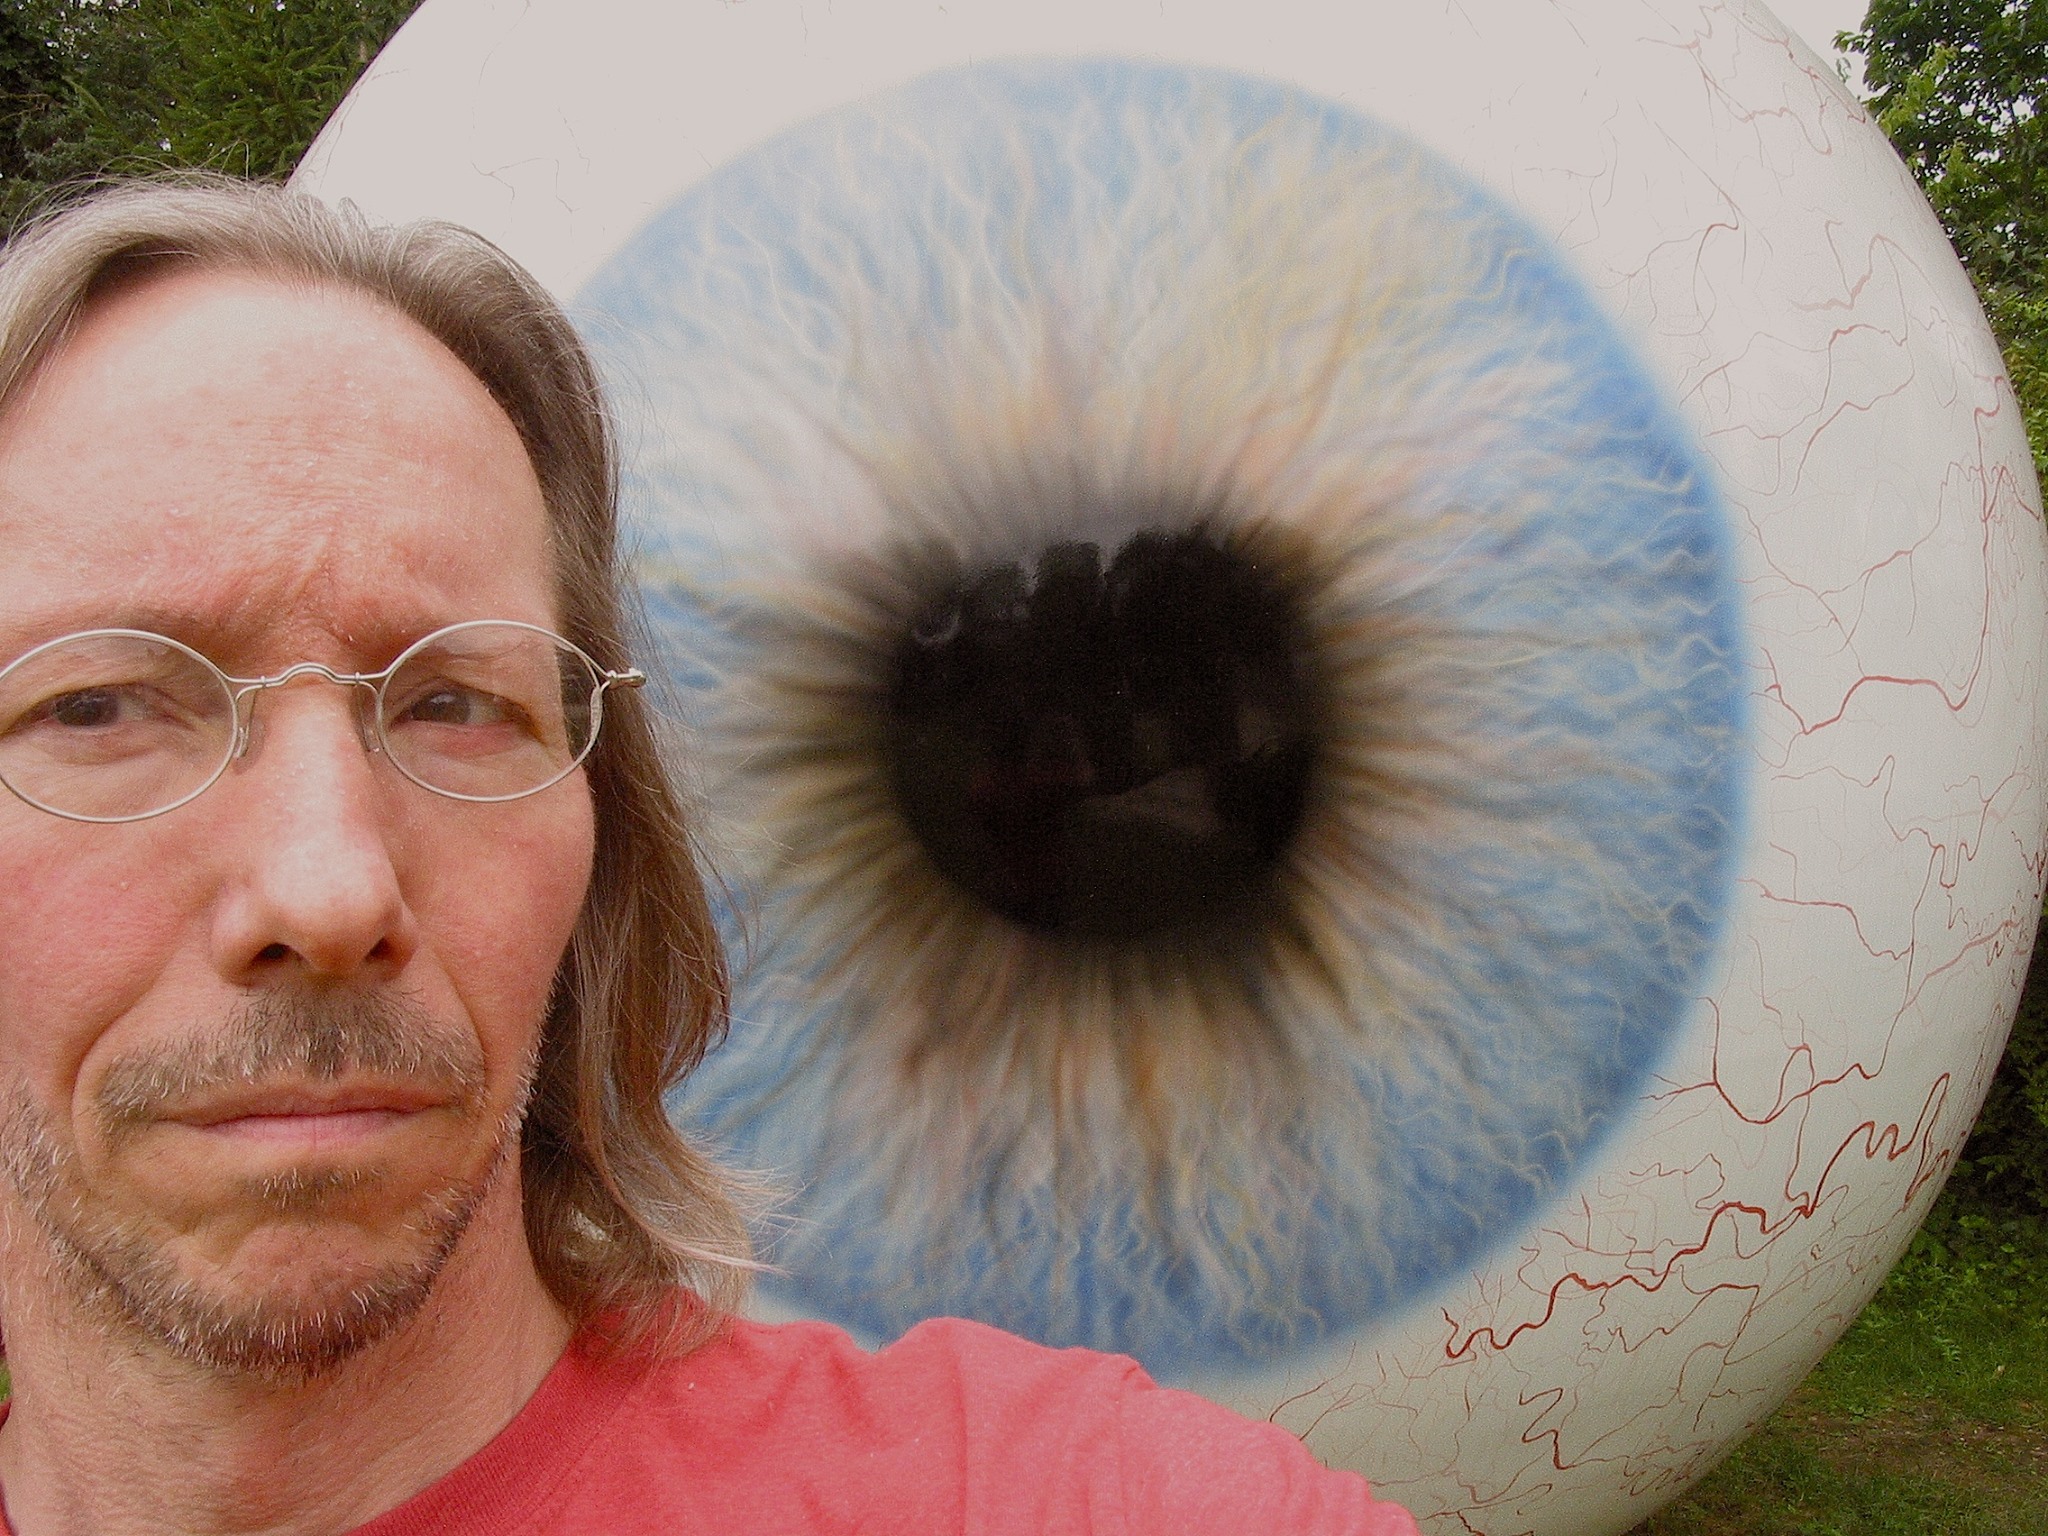 Giant eyeball outdoor sculpture with worried looking photographer